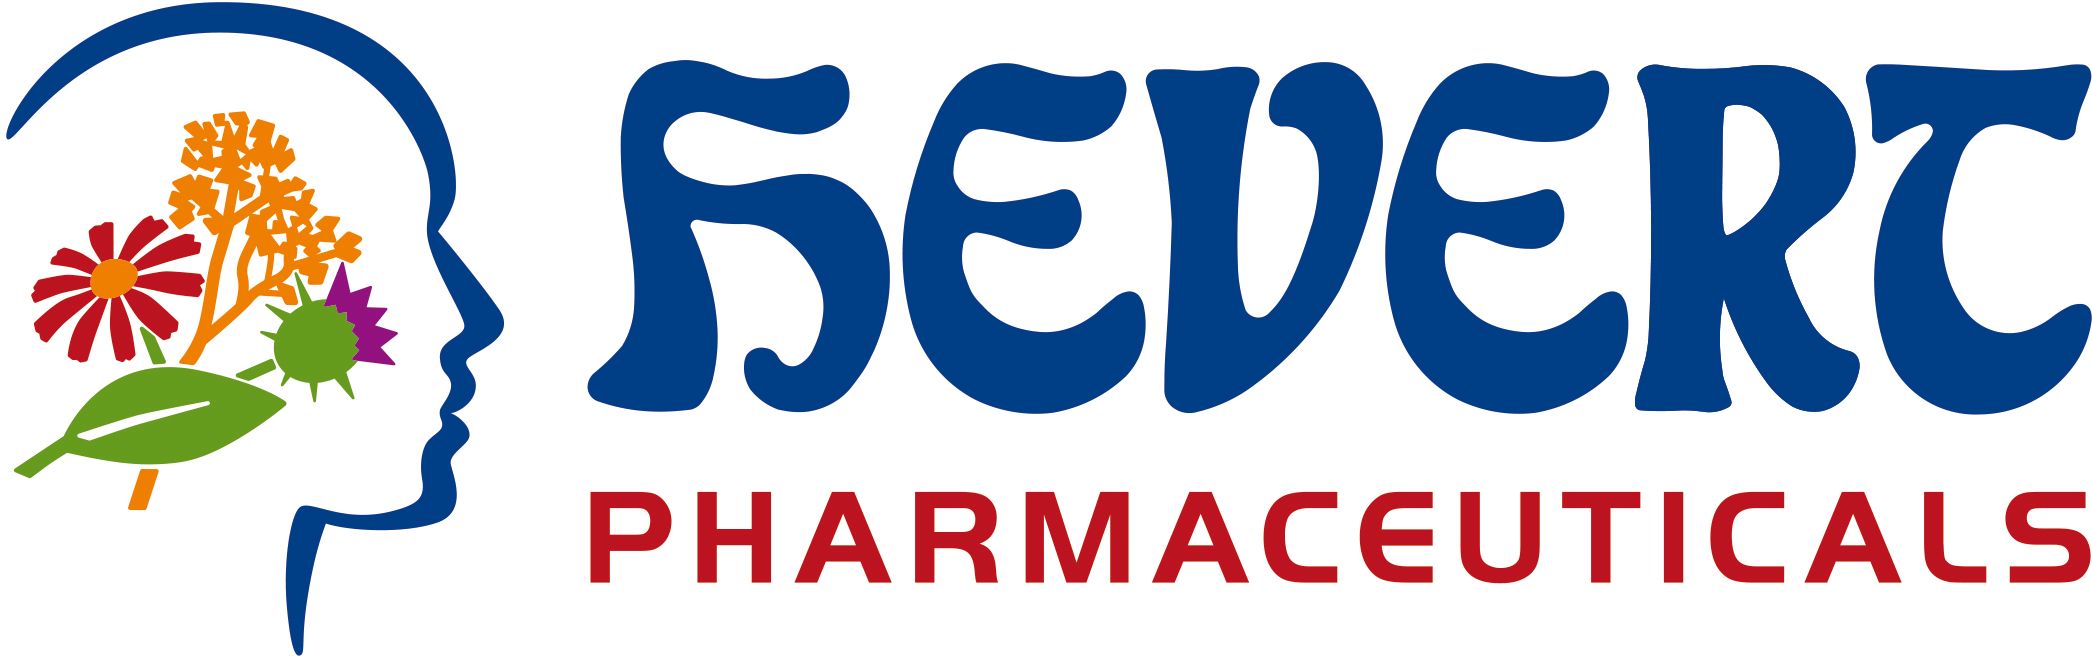 Hevert Pharmaceuticals